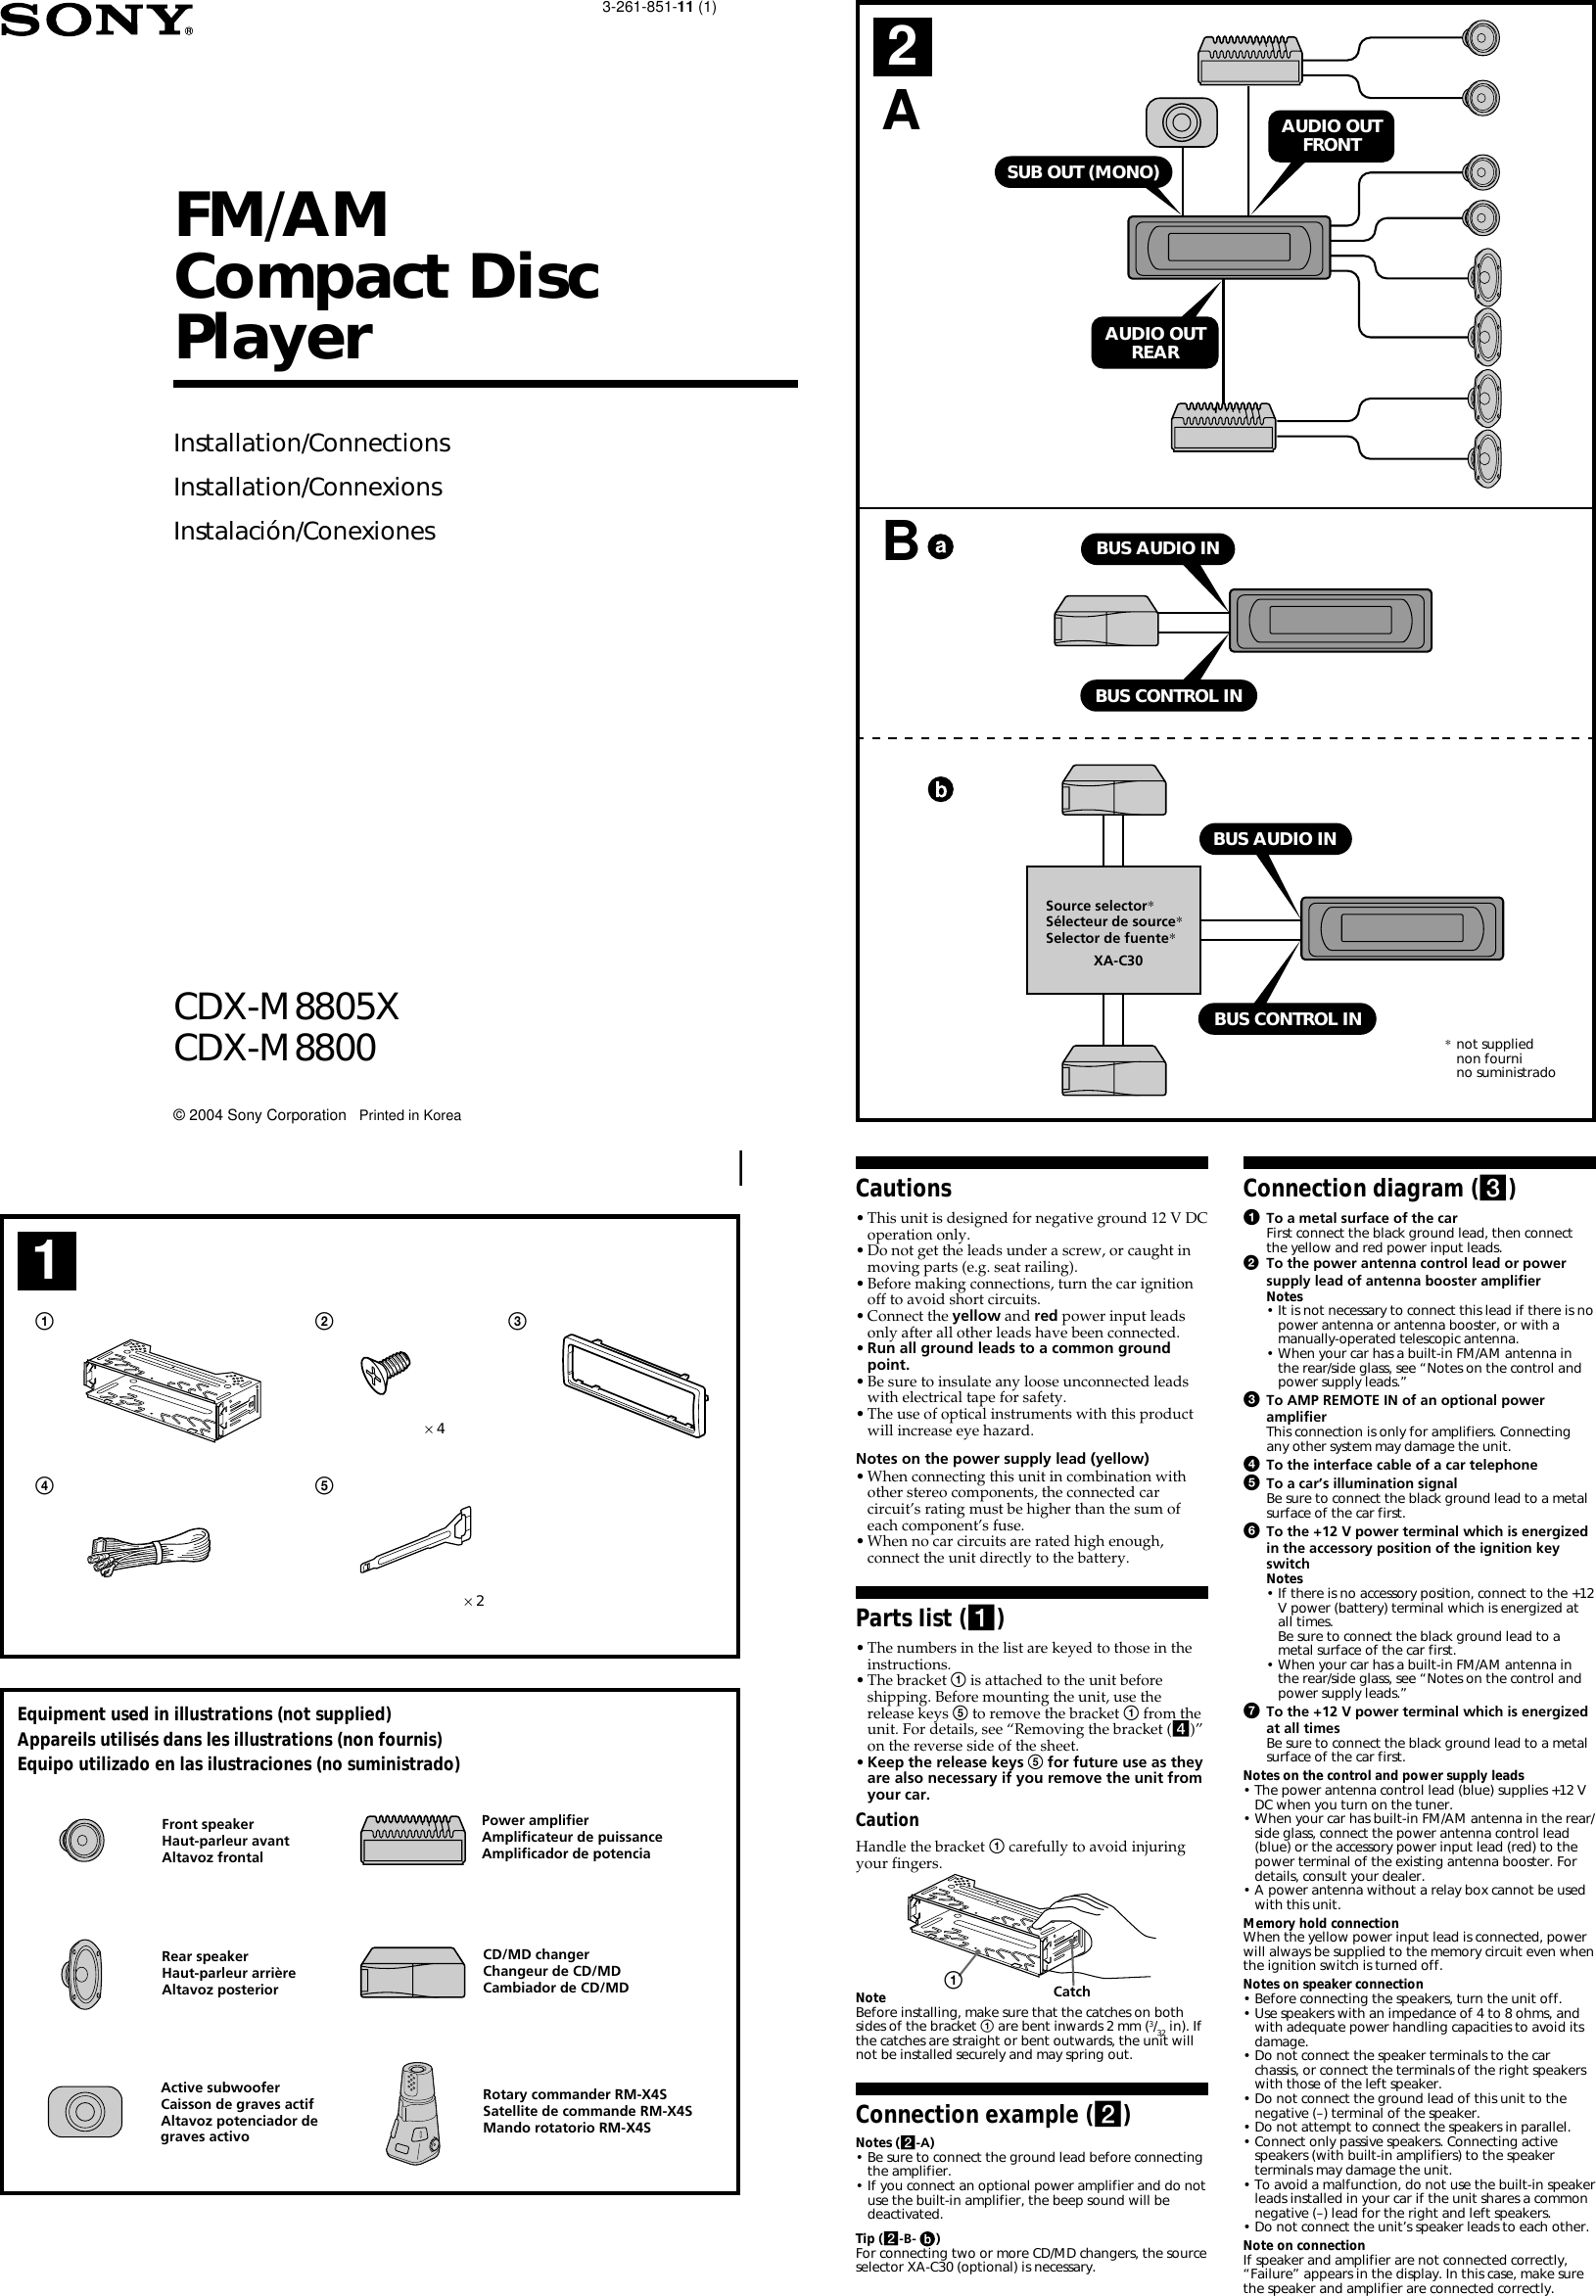 Page 1 of 4 - Sony Sony-Cdx-M8805X-Installation-Instructions- CDX-M8805X/M8800  Sony-cdx-m8805x-installation-instructions